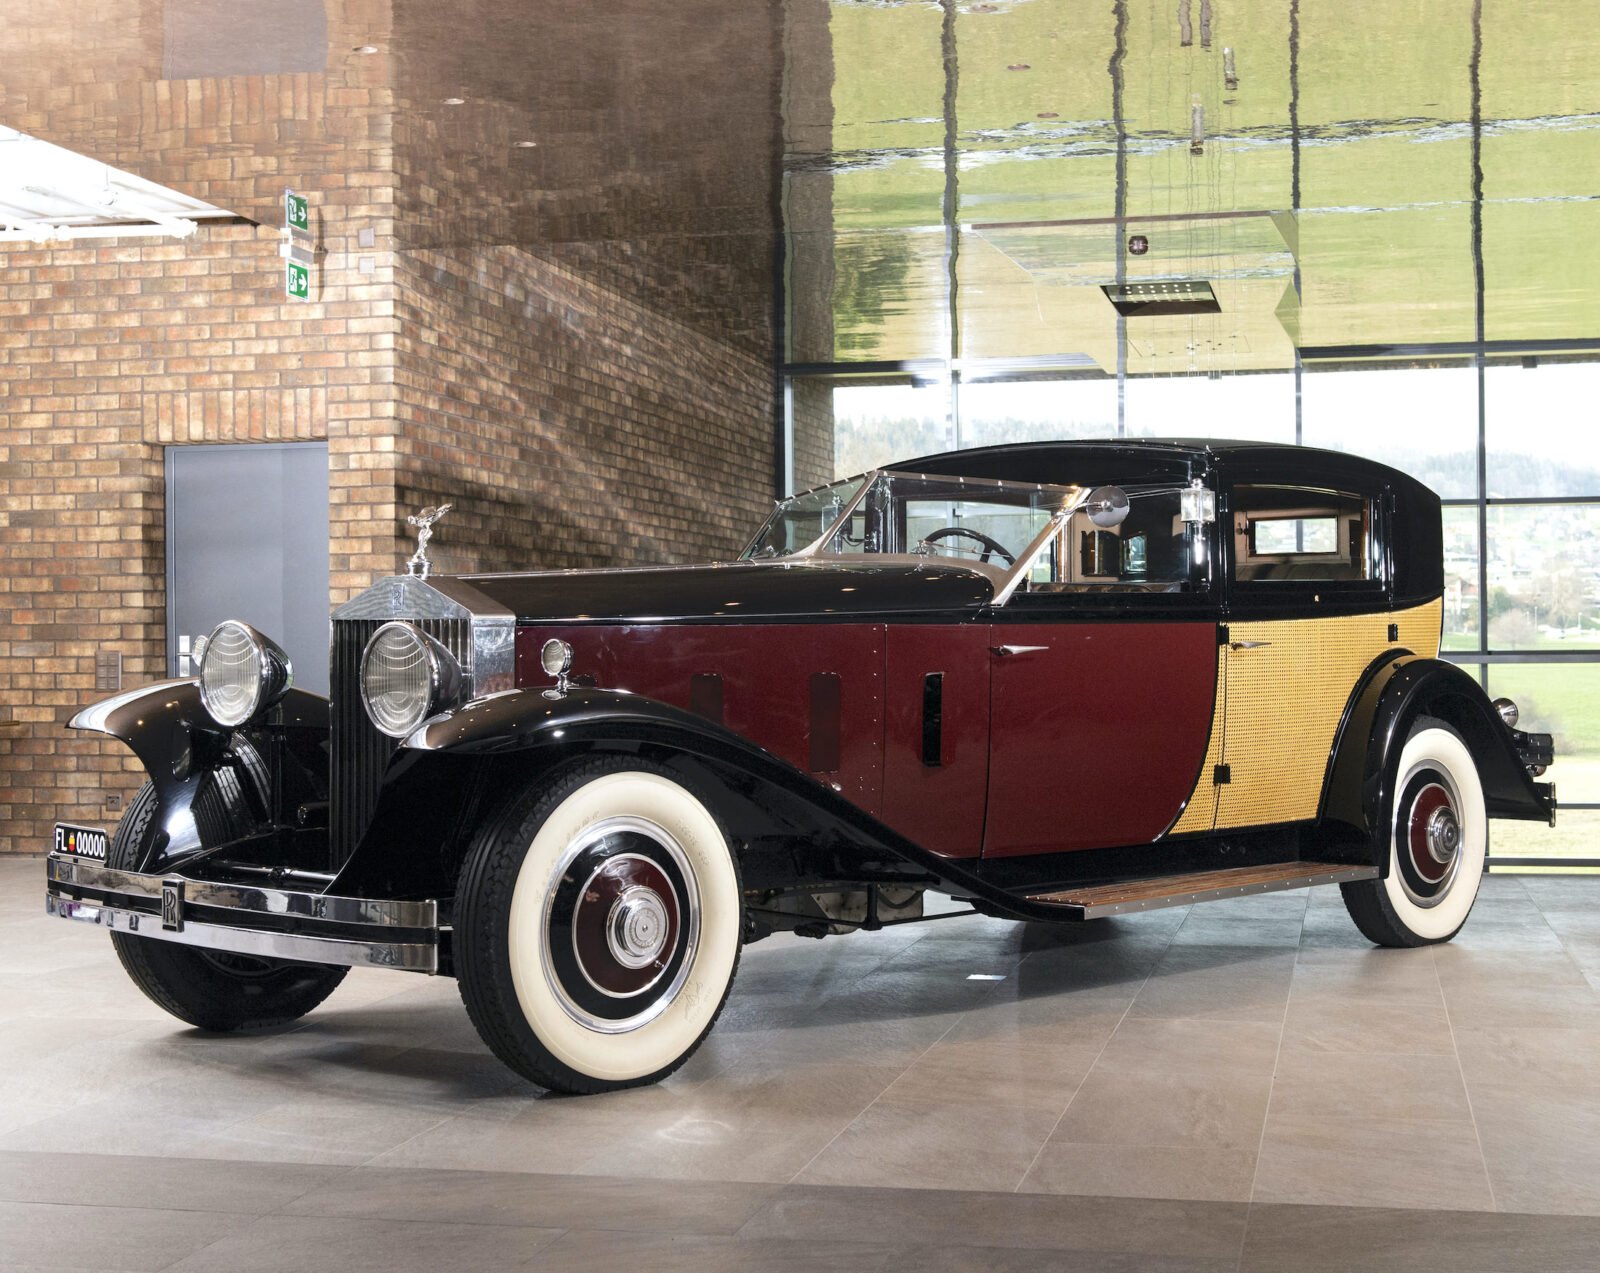 Vintage RollsRoyce and Bentley cars